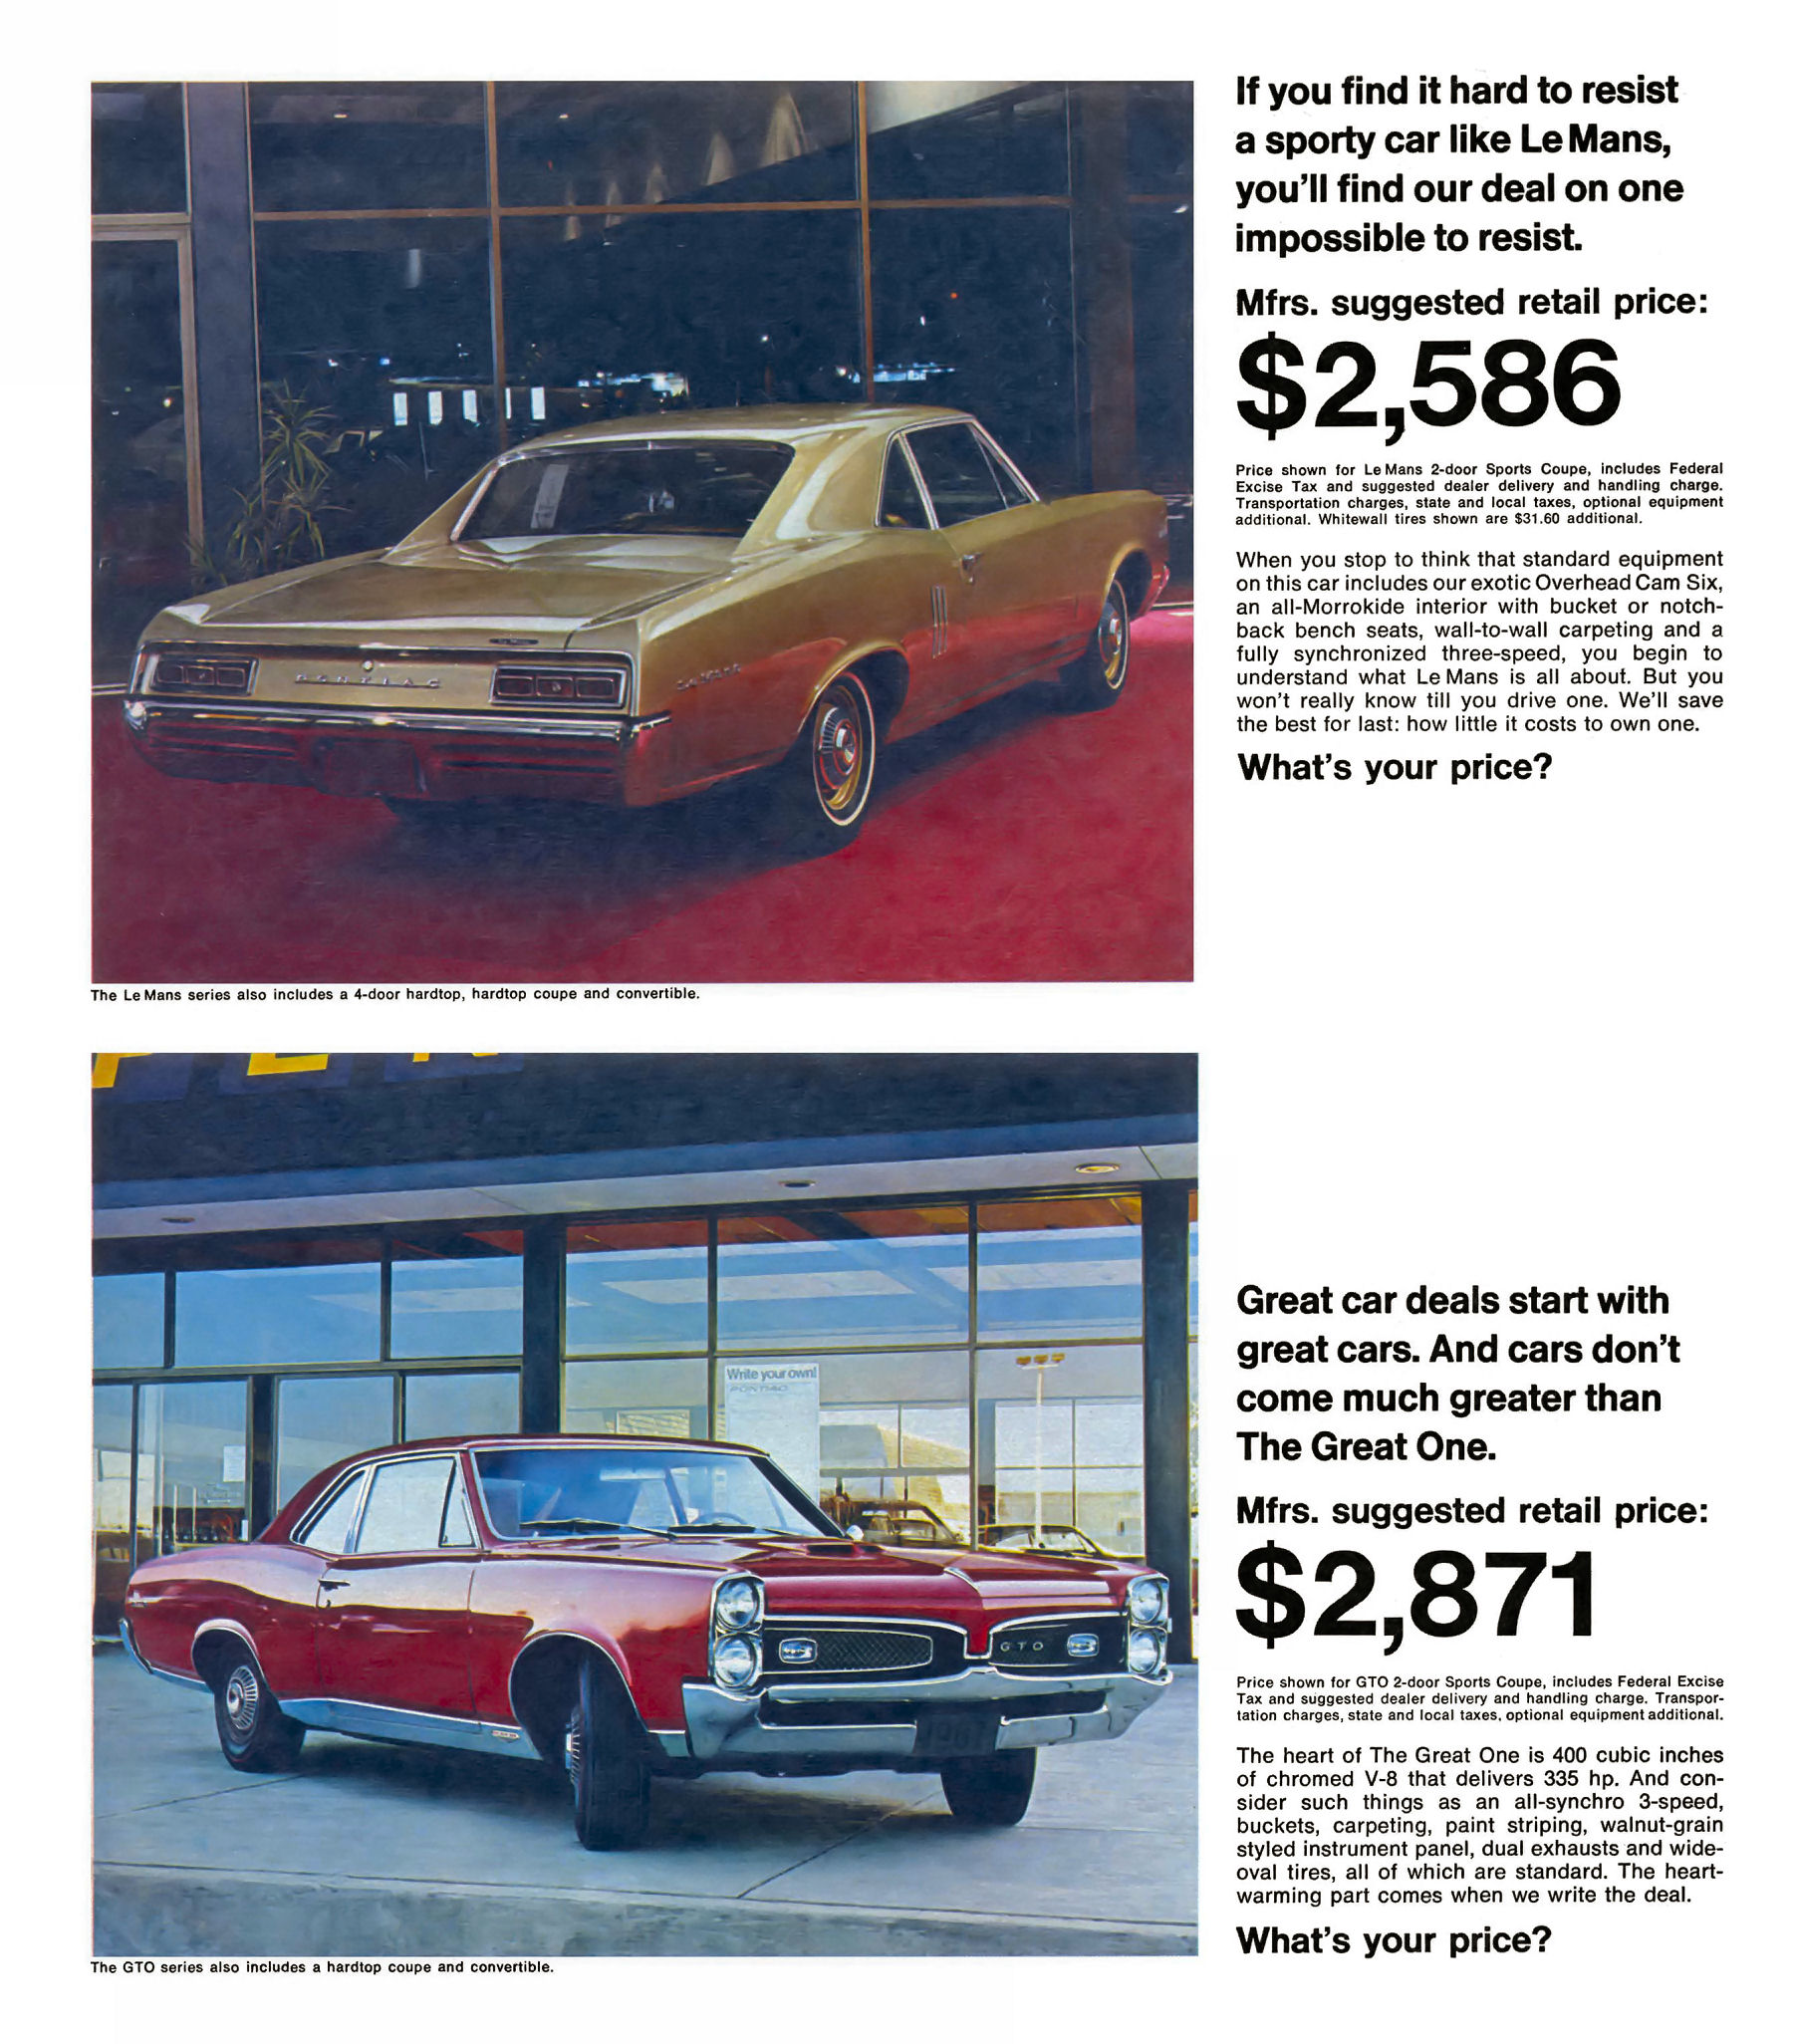 1967_Pontiac_Newspaper_Insert-03